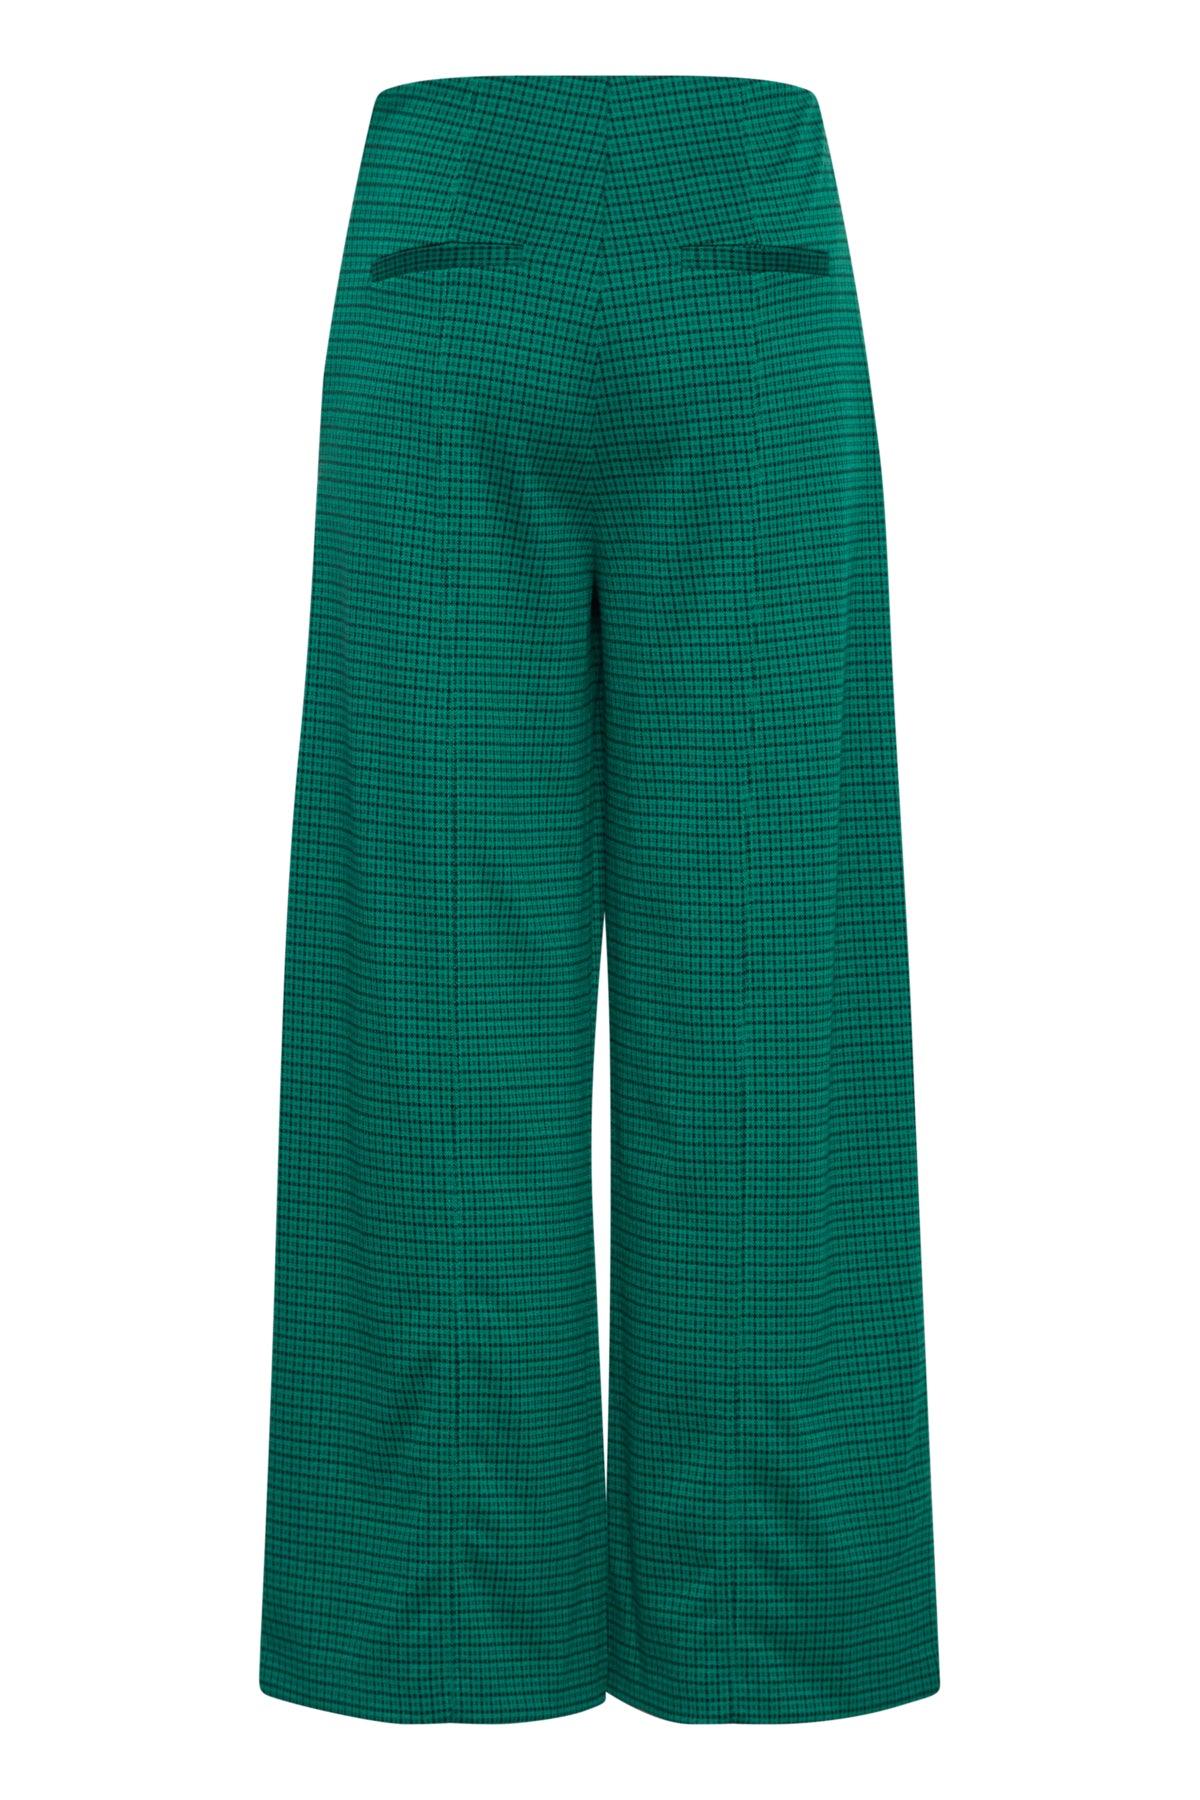 Pantalones ICHI Kate Cameleon Cadmium Green - ECRU